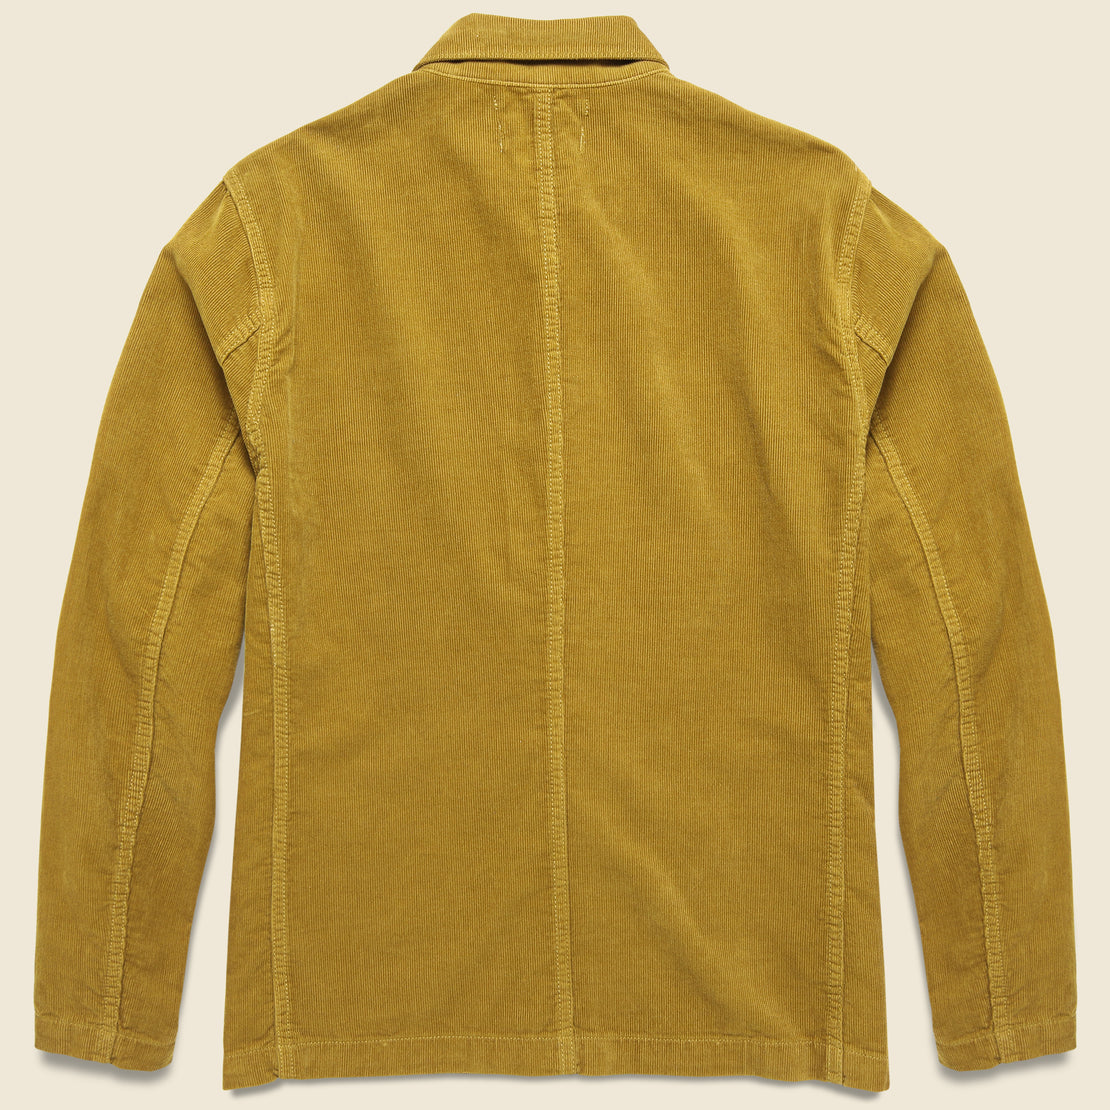 Fine Corduroy Work Jacket  - Golden Khaki - Alex Mill - STAG Provisions - Outerwear - Coat / Jacket